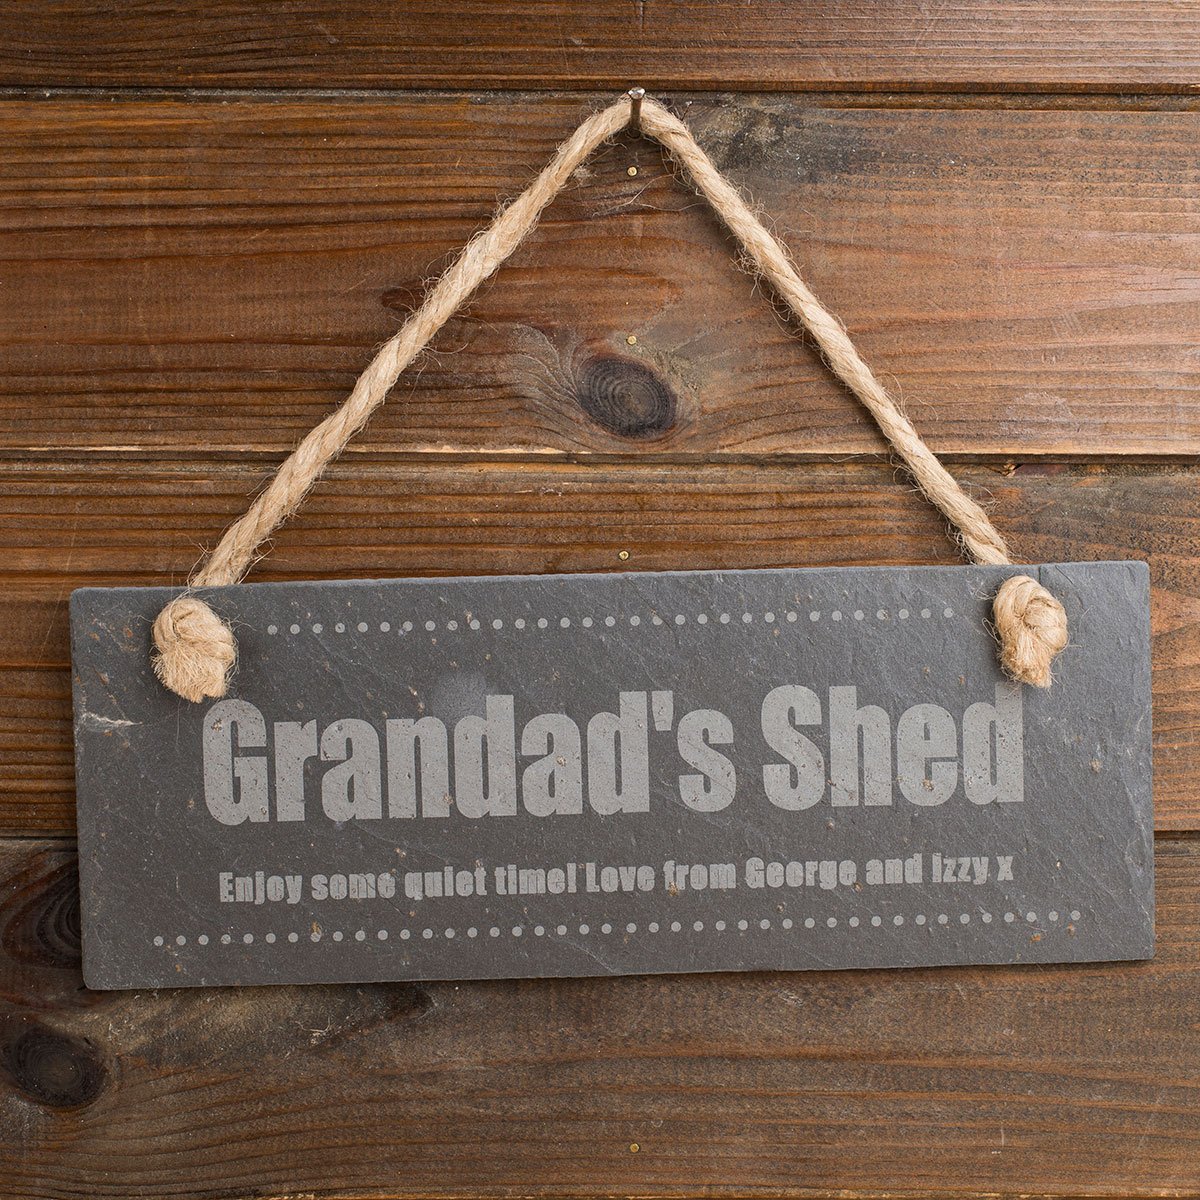 Personalised Engraved Grandad's Shed Hanging Slate Sign